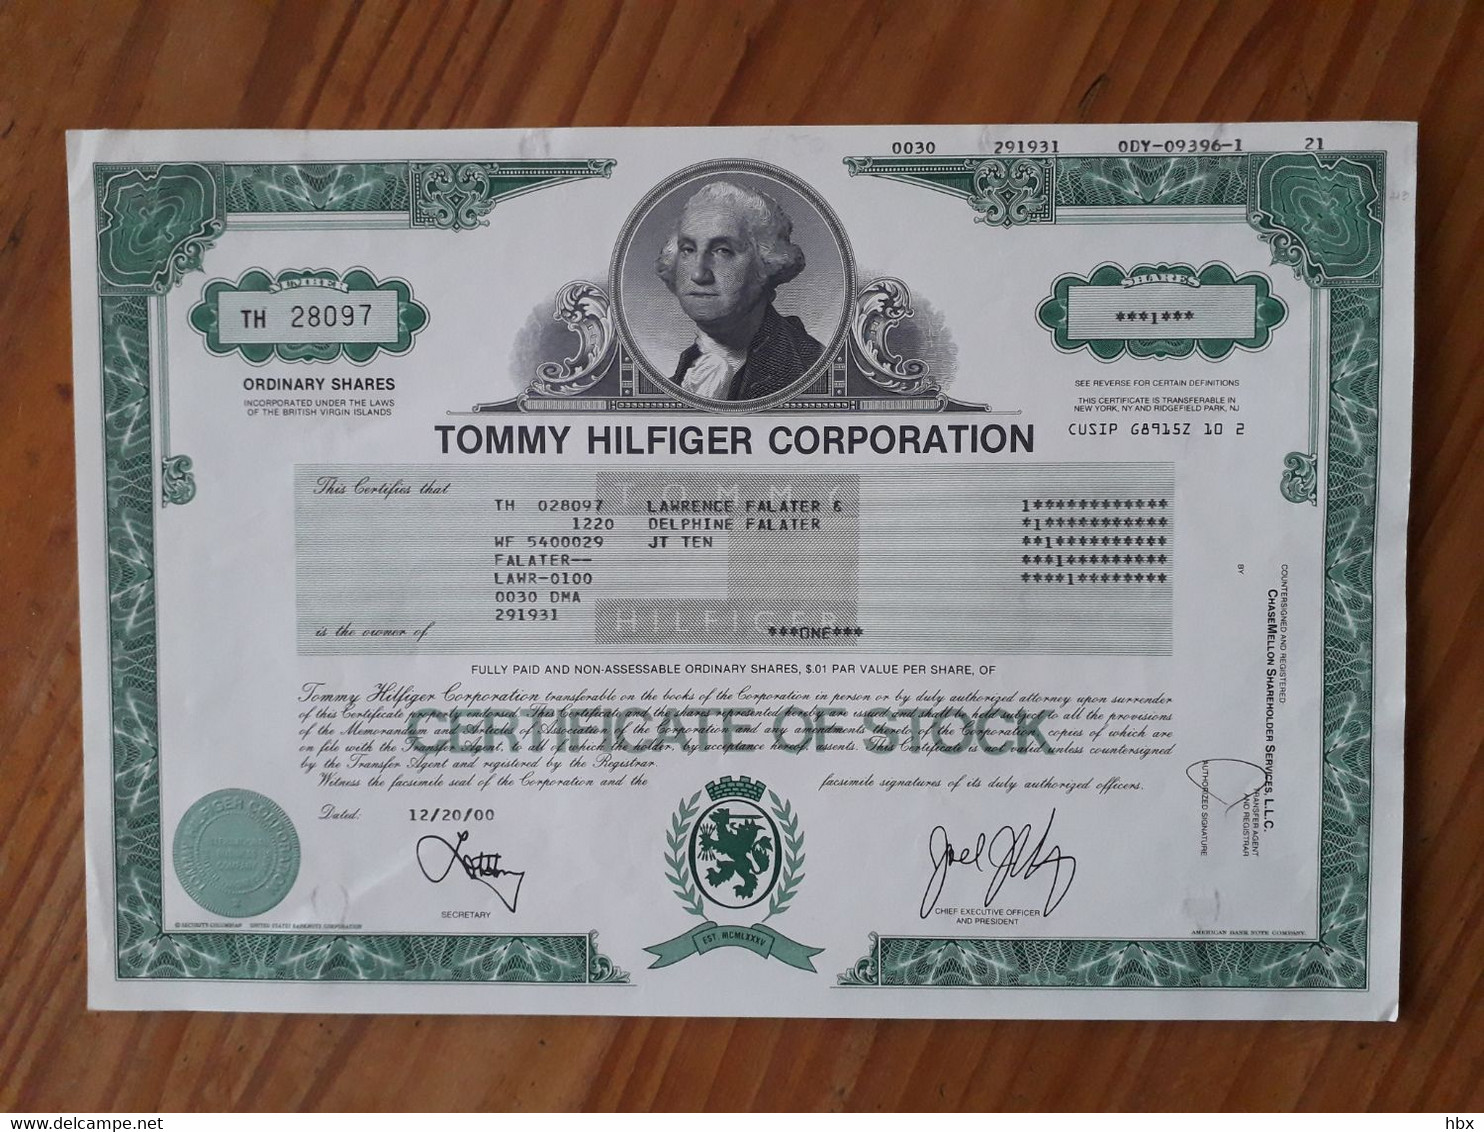 Tommy Hilfiger Corporation - 2000 - Textile